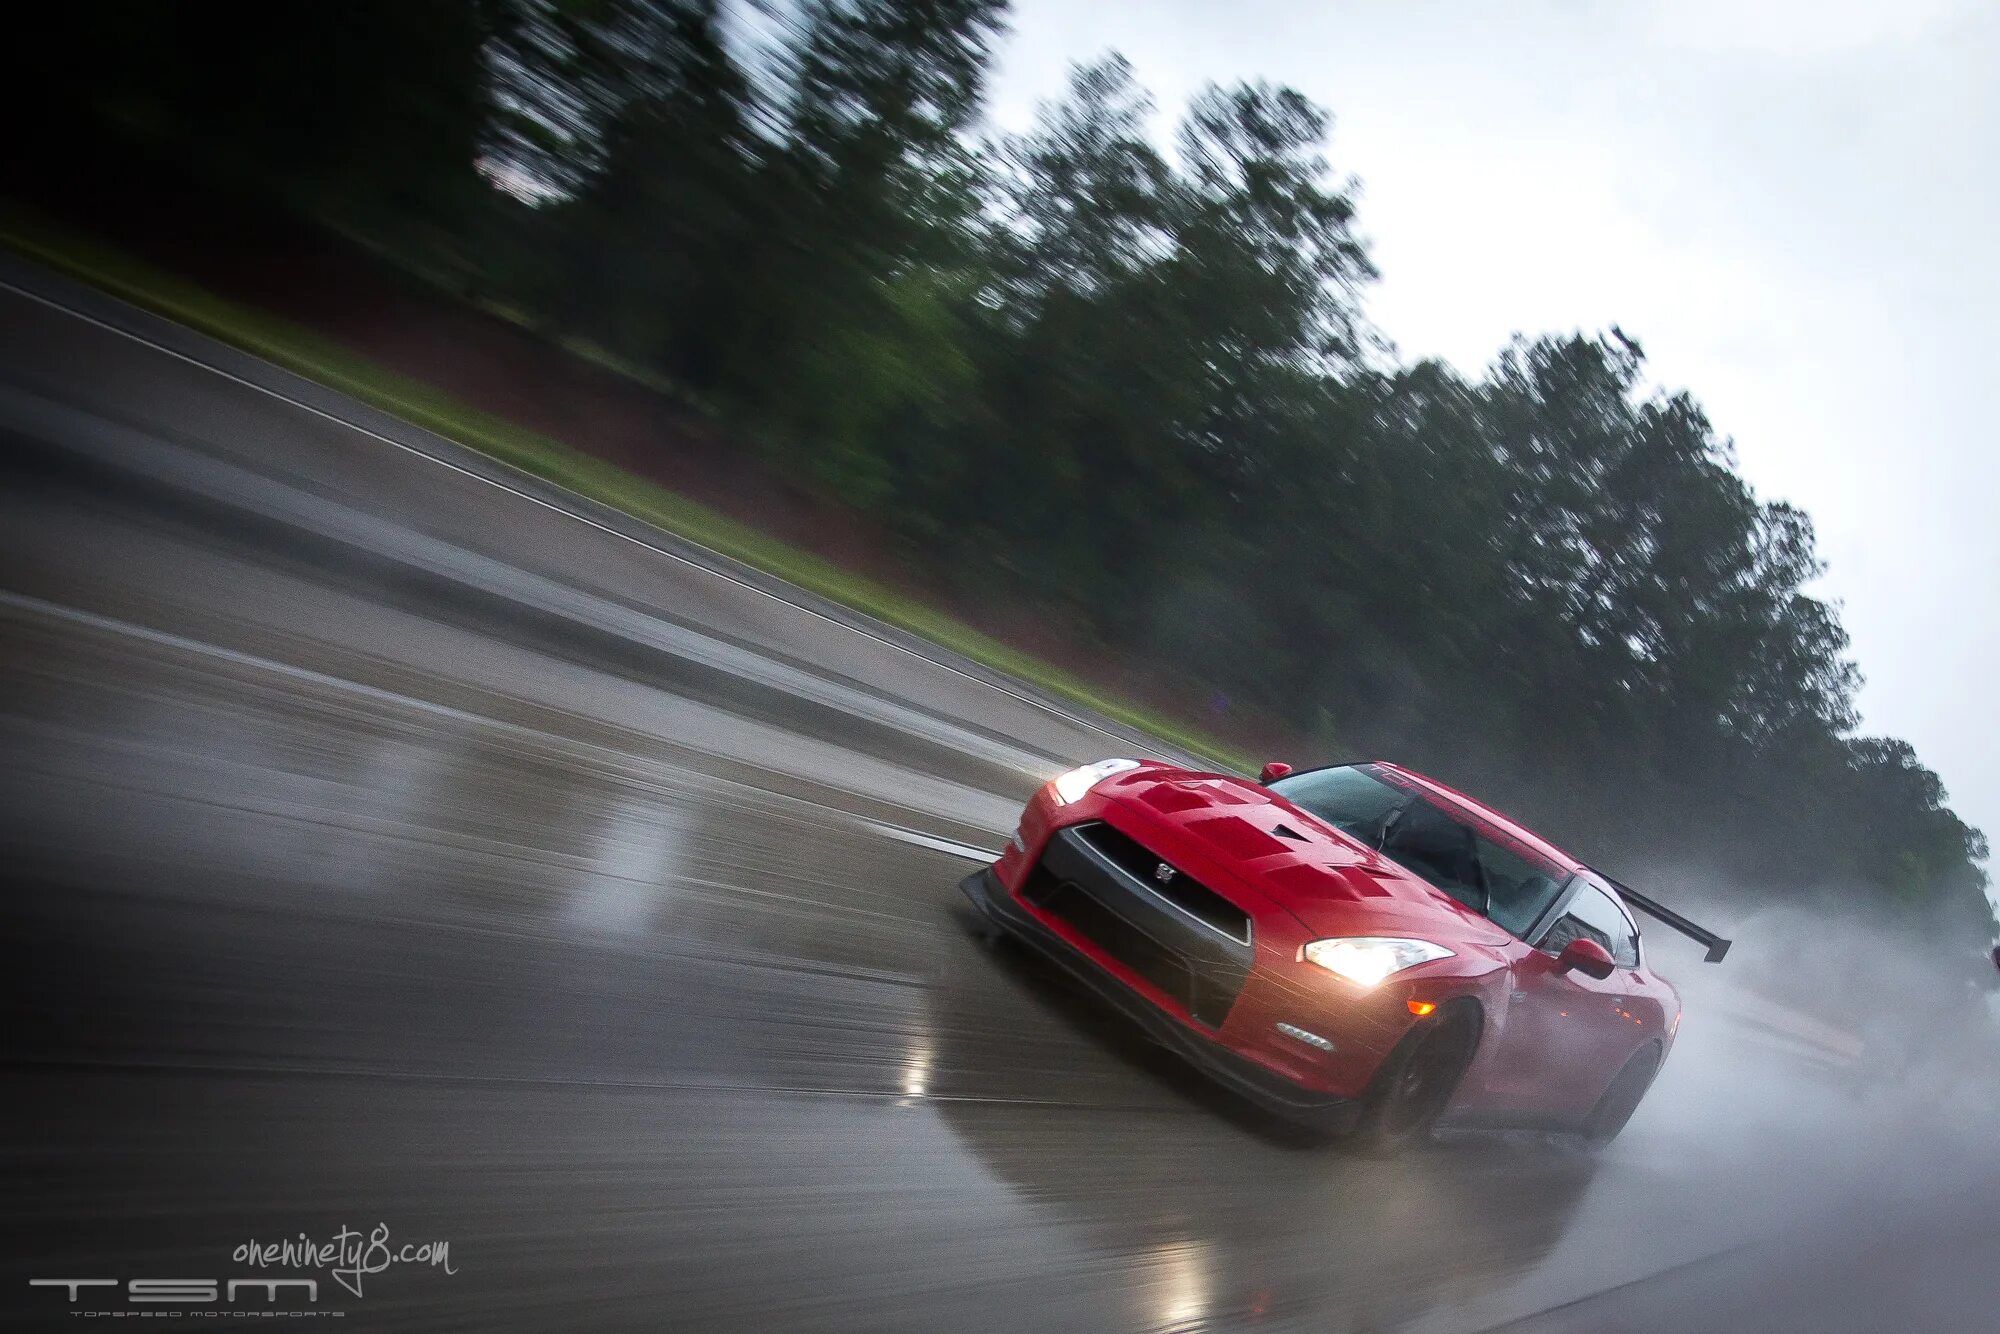 Nissan GTR r35 дождь. Ниссан ГТР под дождем. Nissan Skyline скорость. Ниссан Скайлайн в дождь. Driver rain